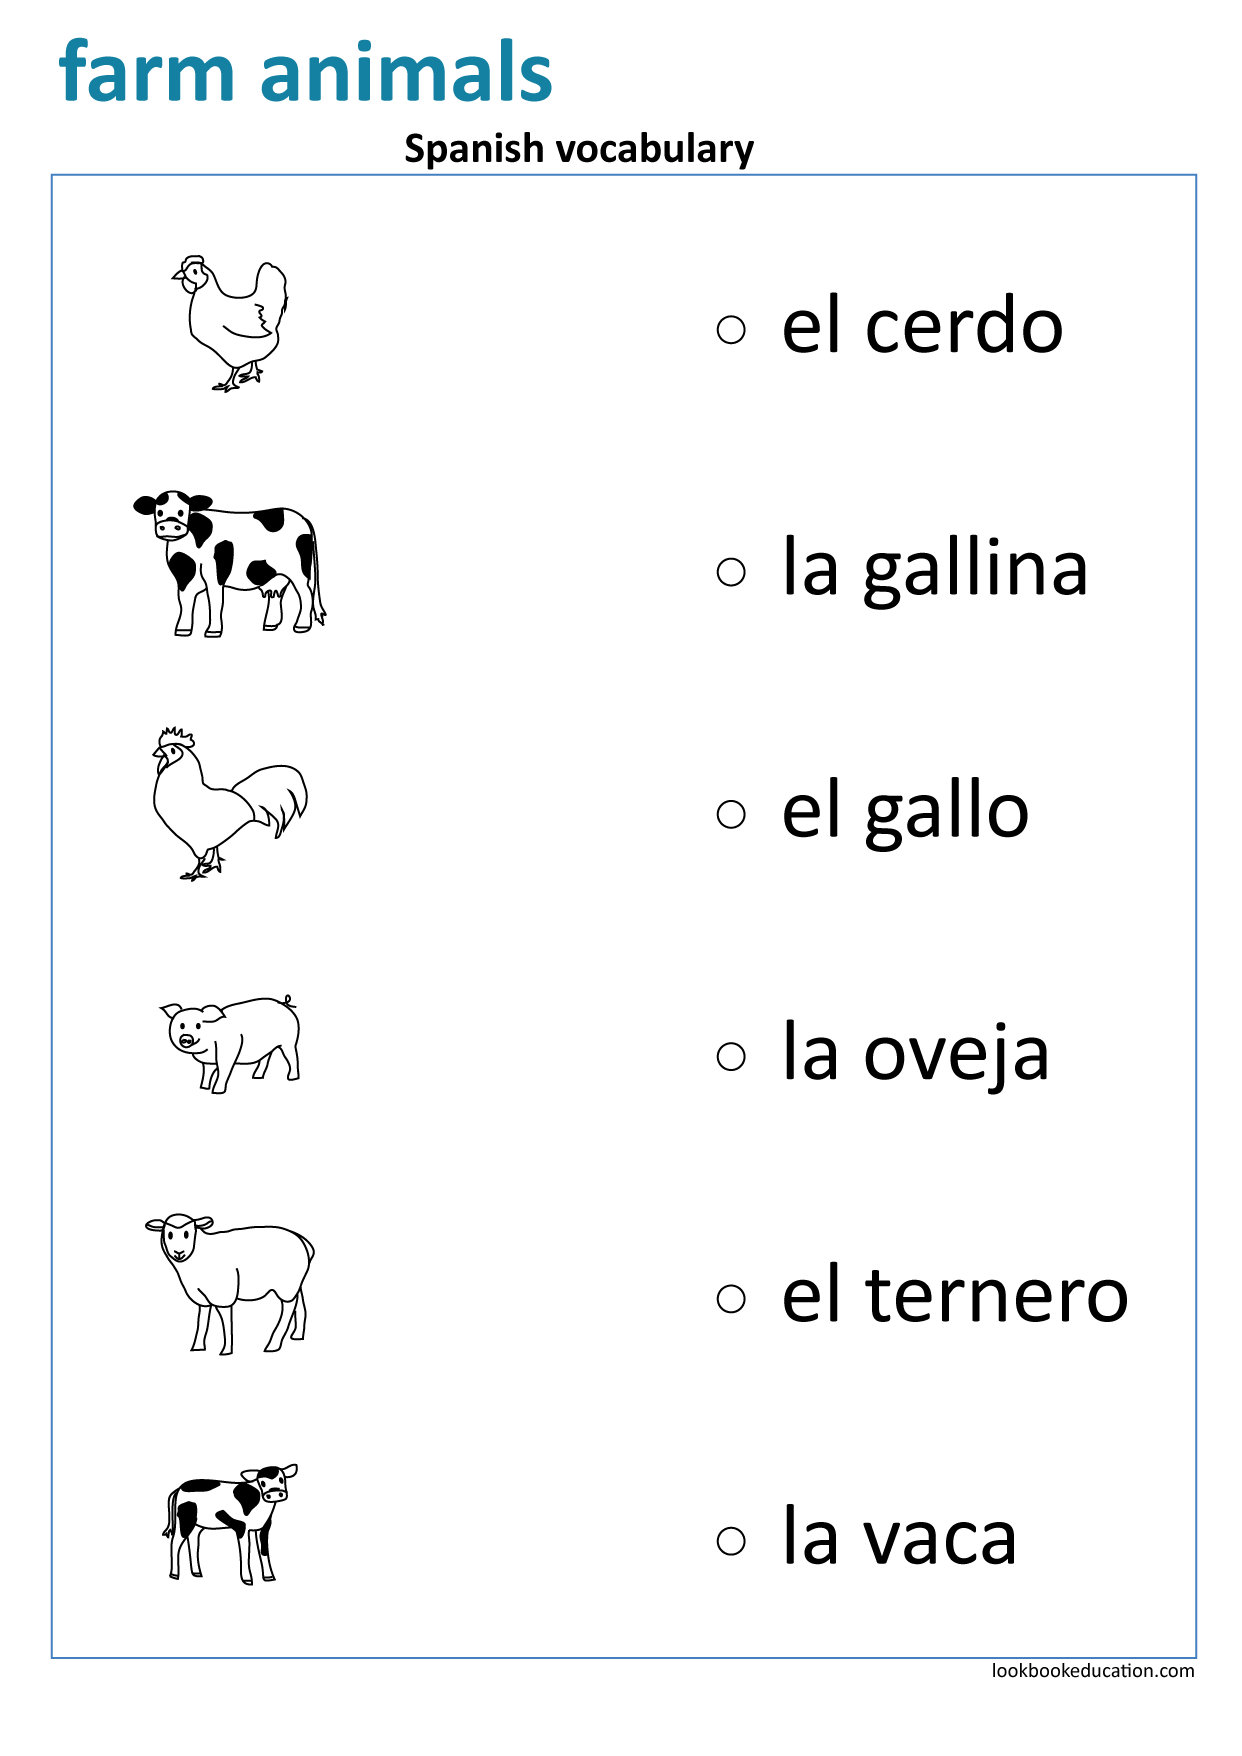 worksheet-spanish-vocabulary-farm-animals-lookbookeducation